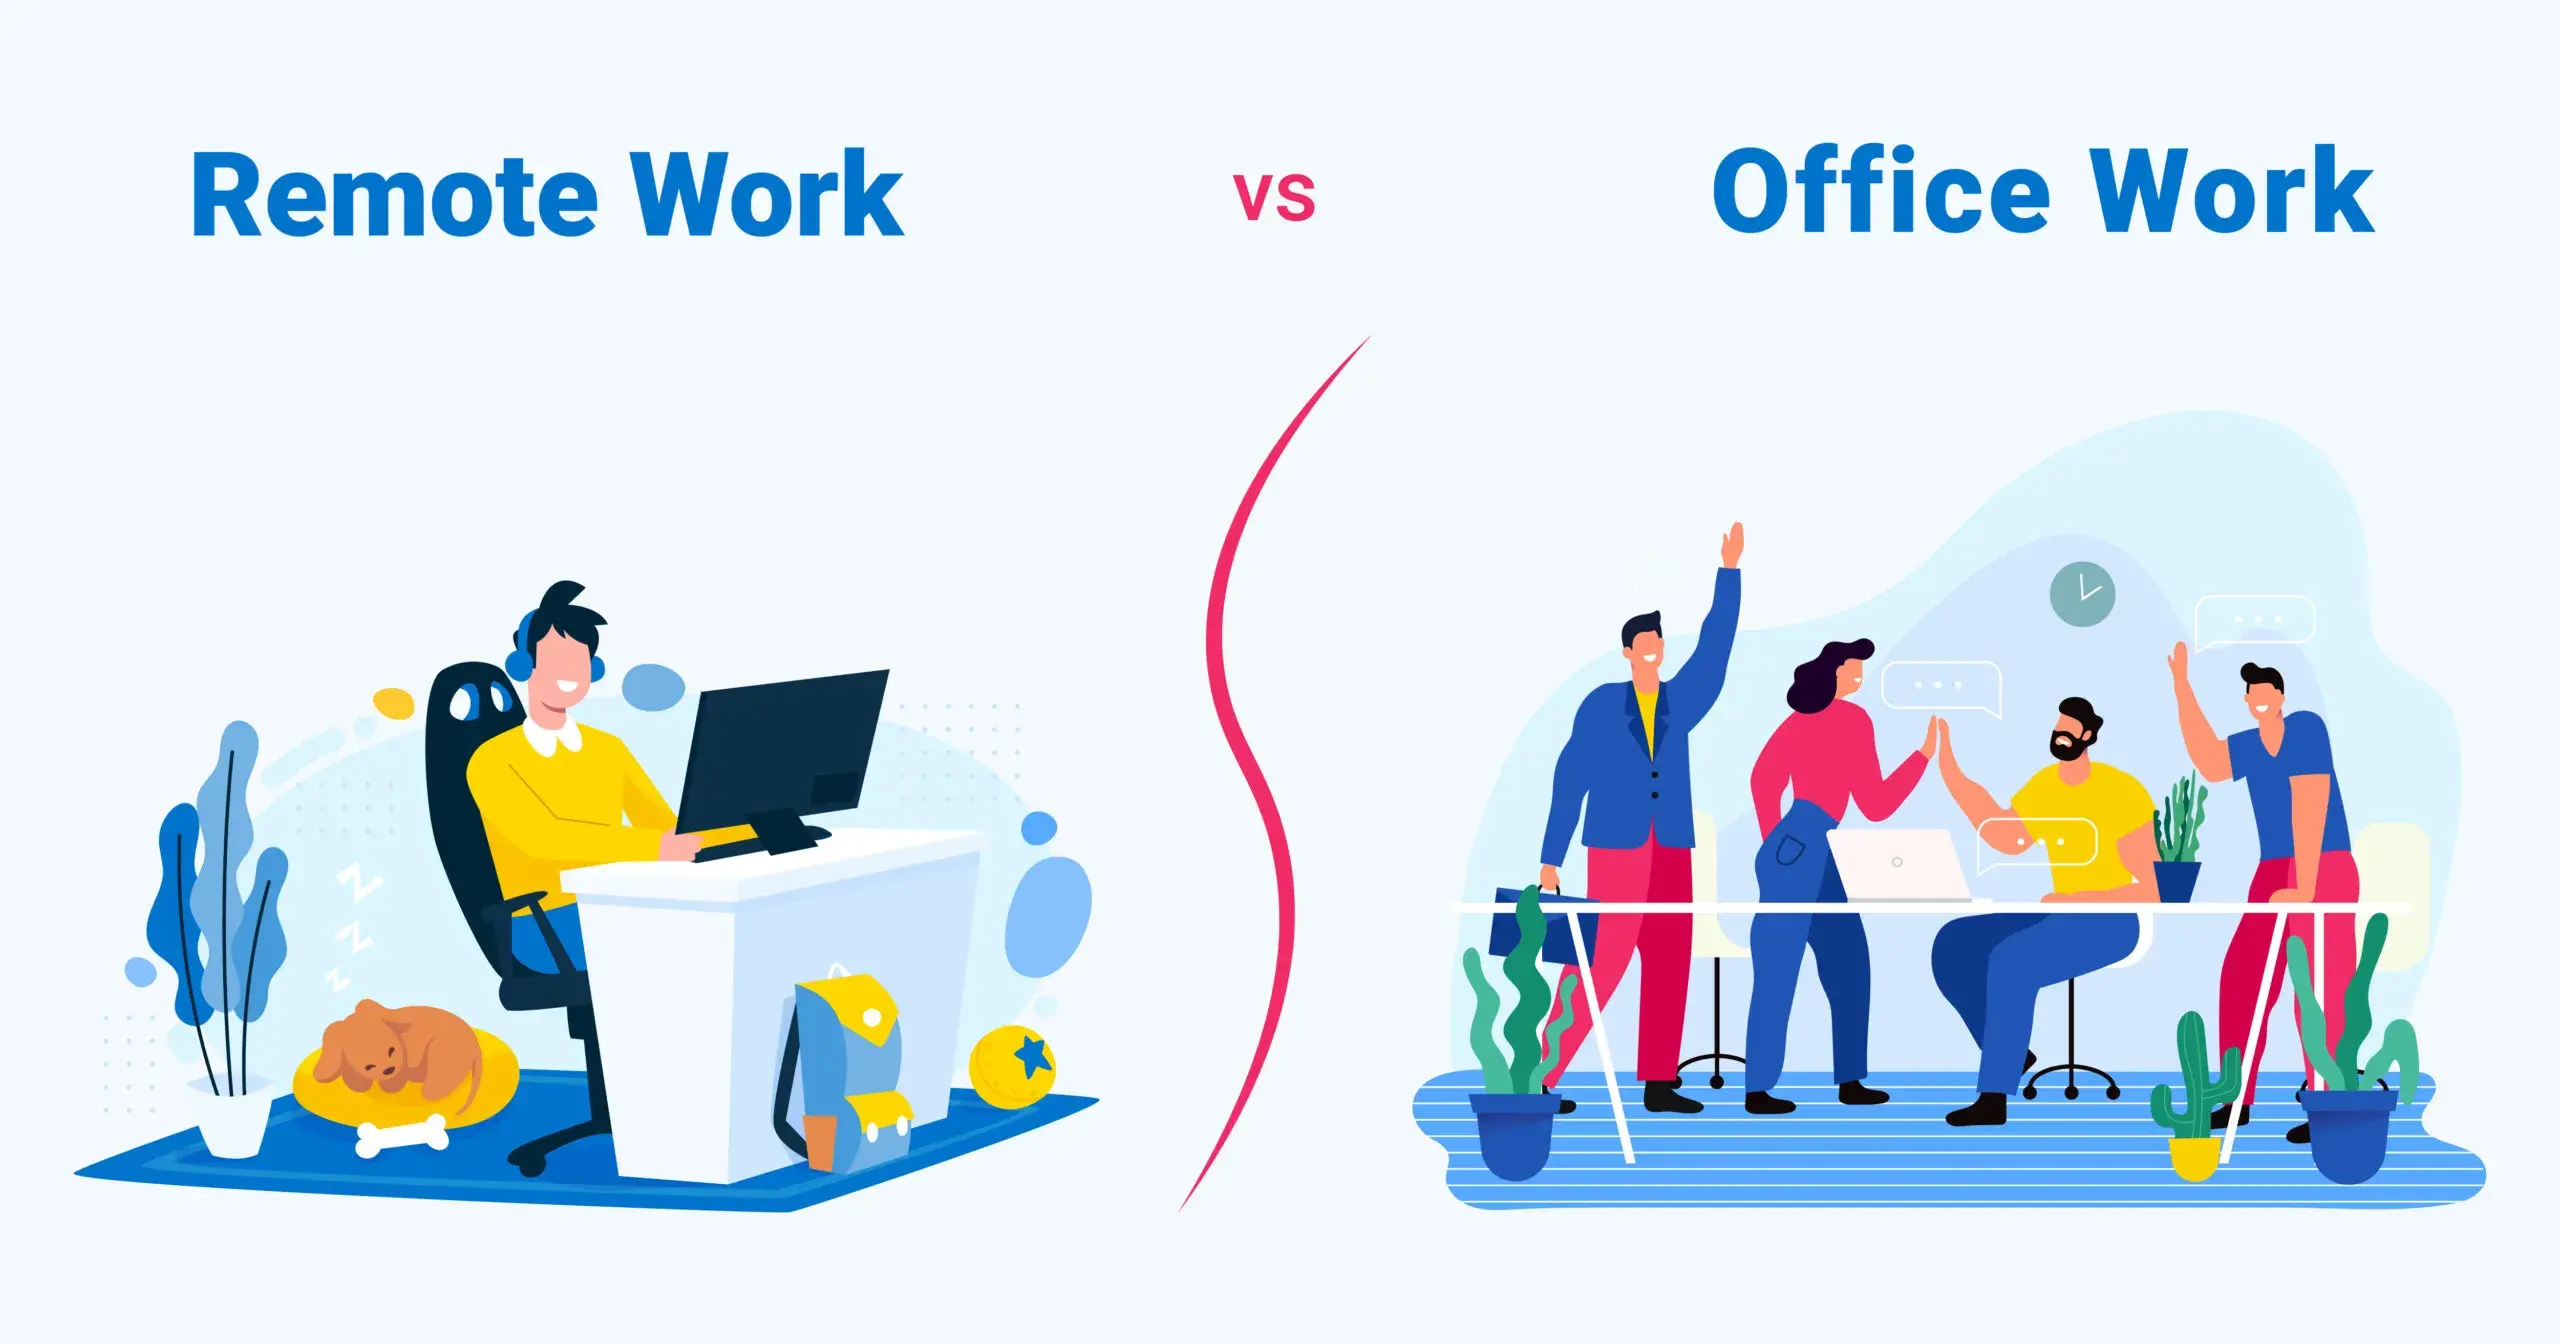 Remote Work vs Office Work